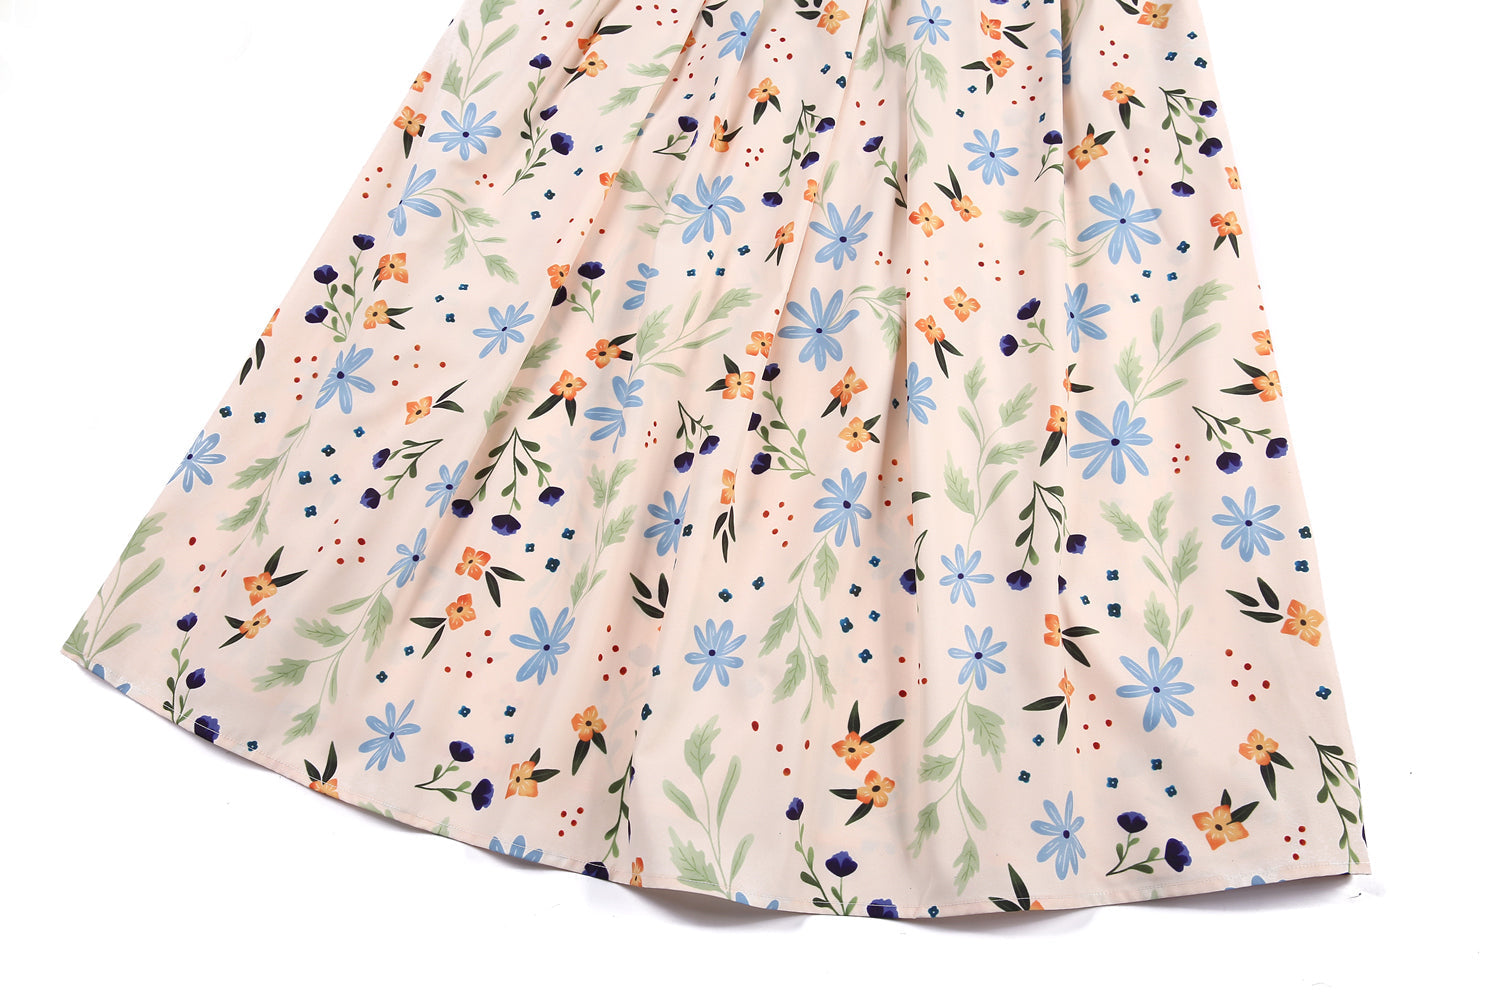 Denim Stitching Floral Print Matching Midi Family Matching Dresses & Tshirts